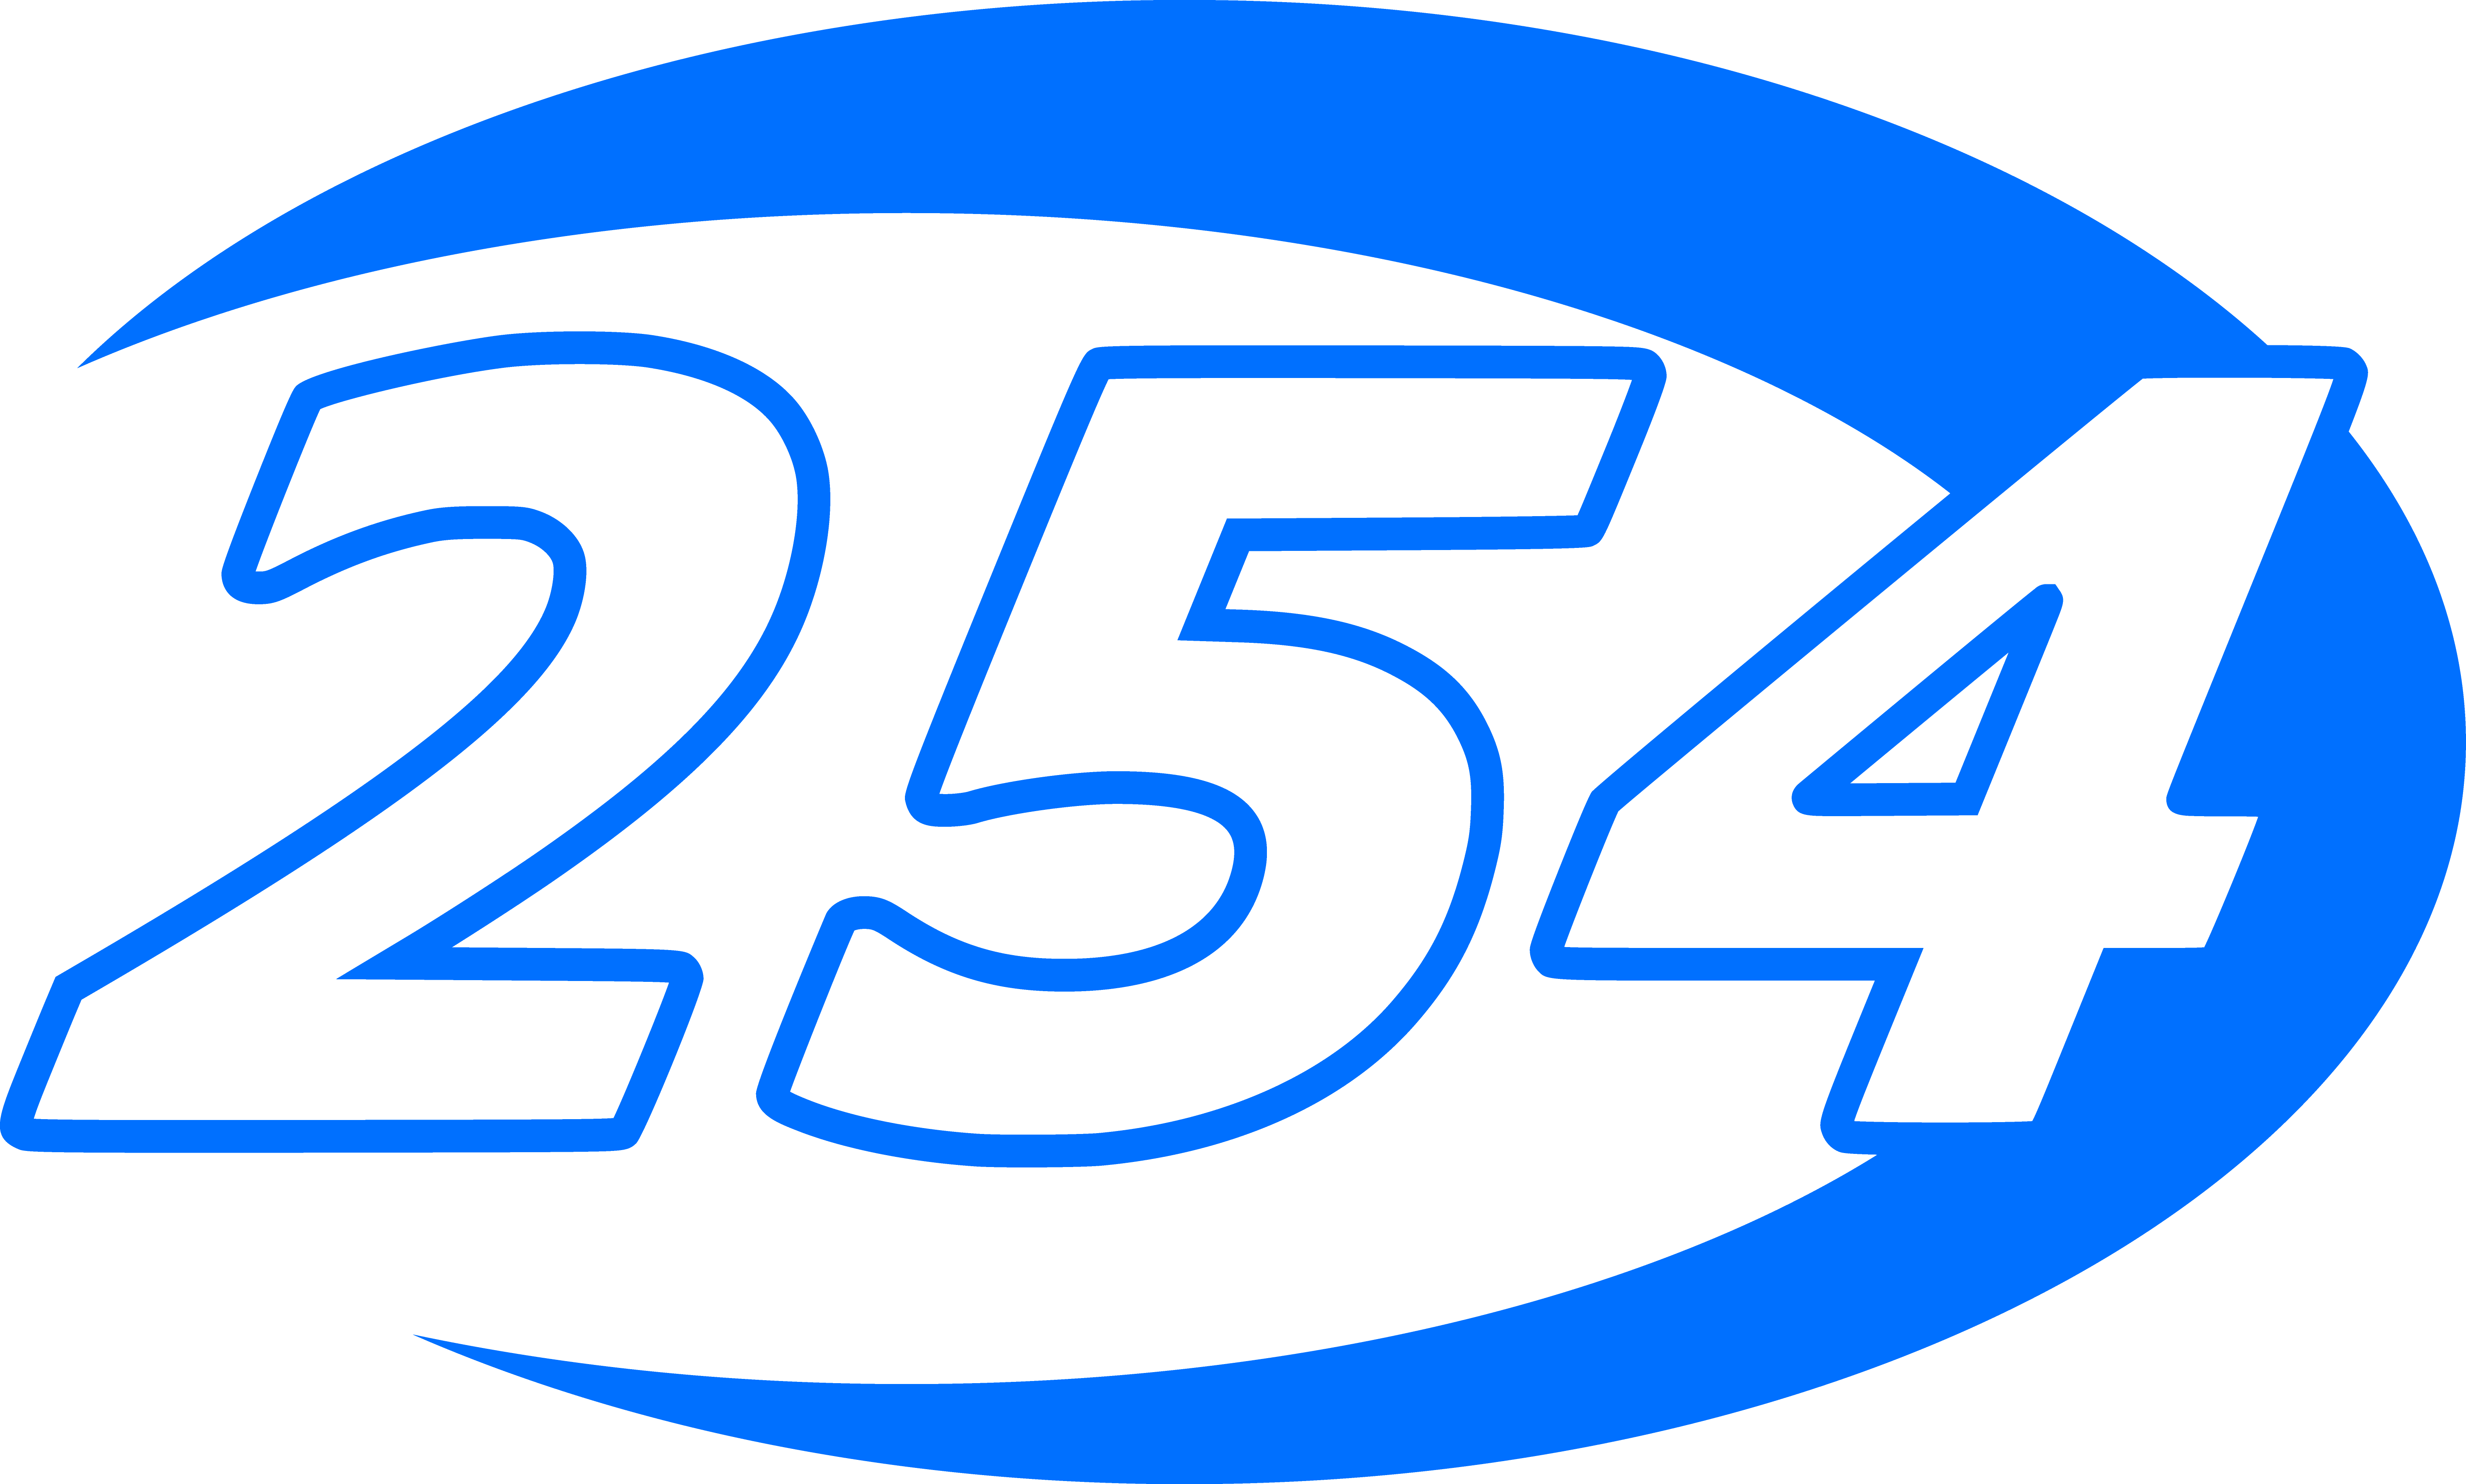 Team 254 Logo